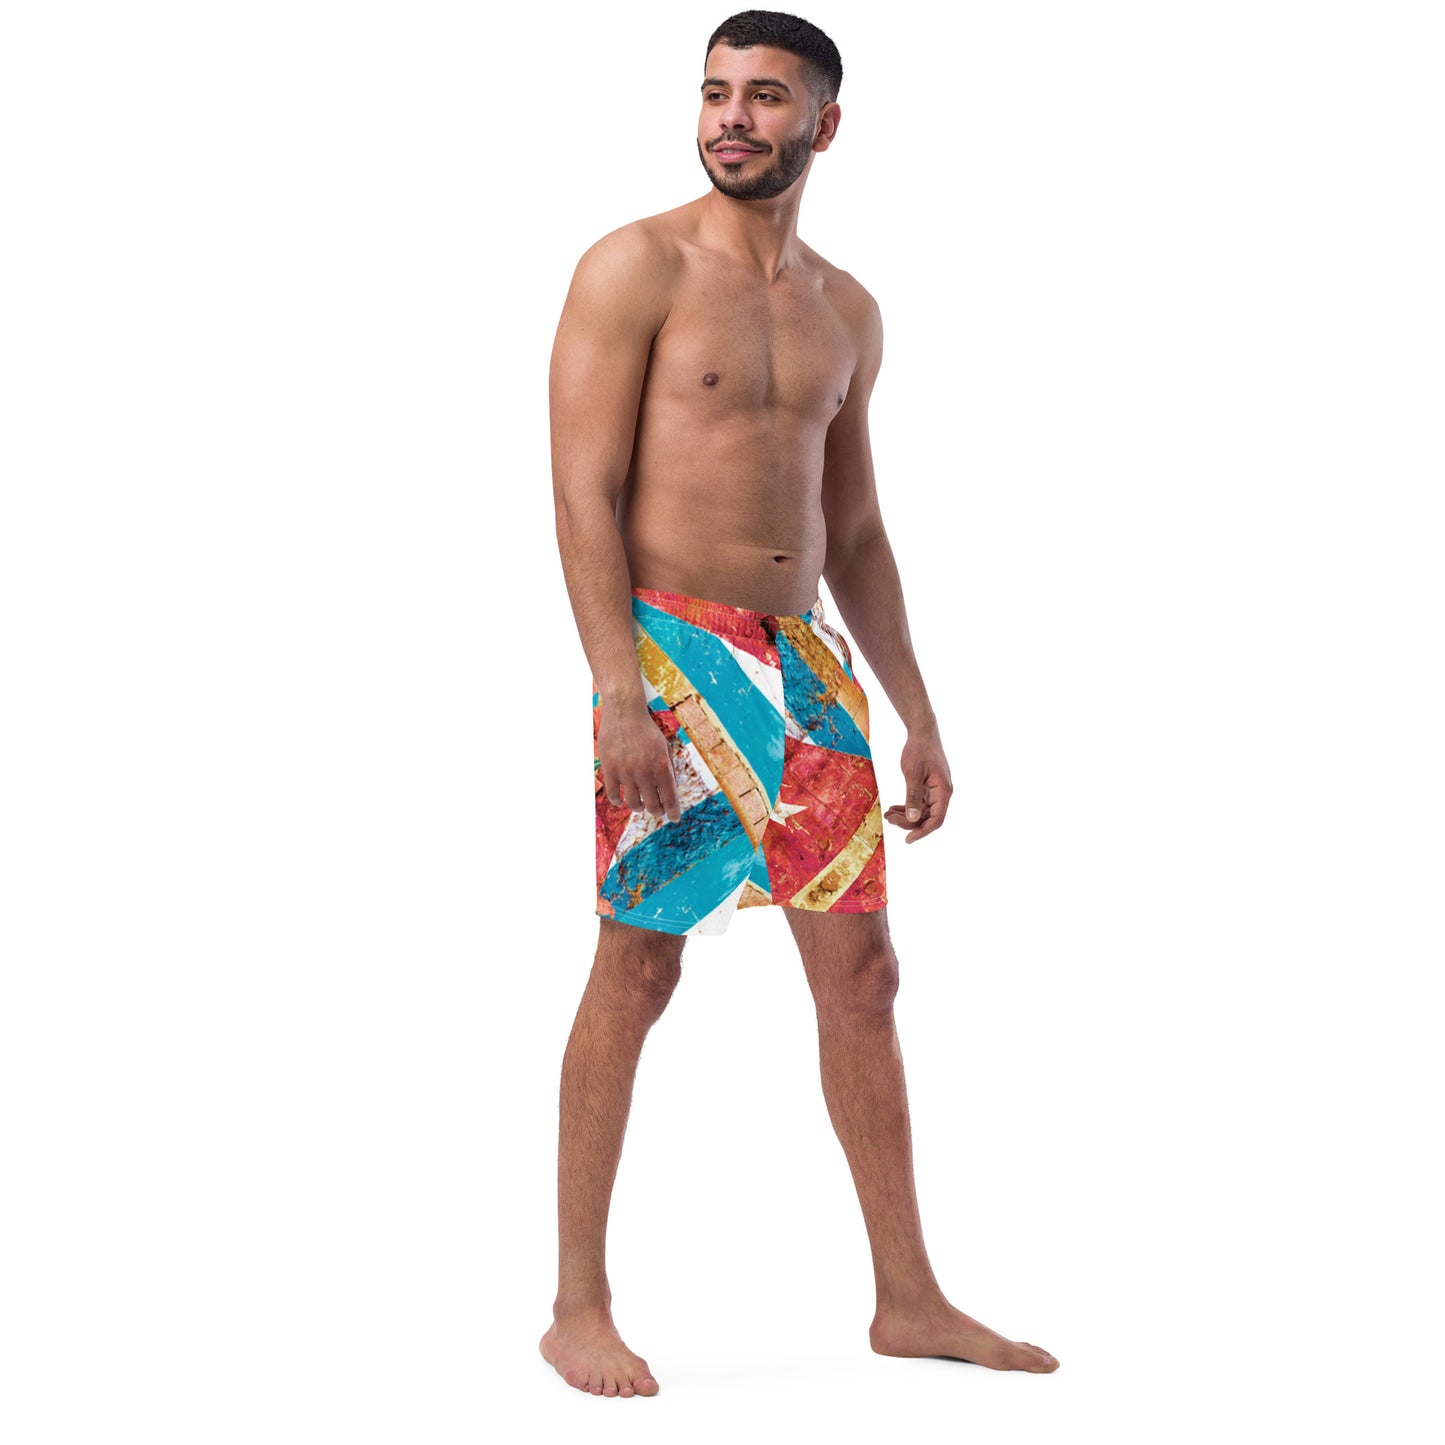 Bandera Men's swim trunks